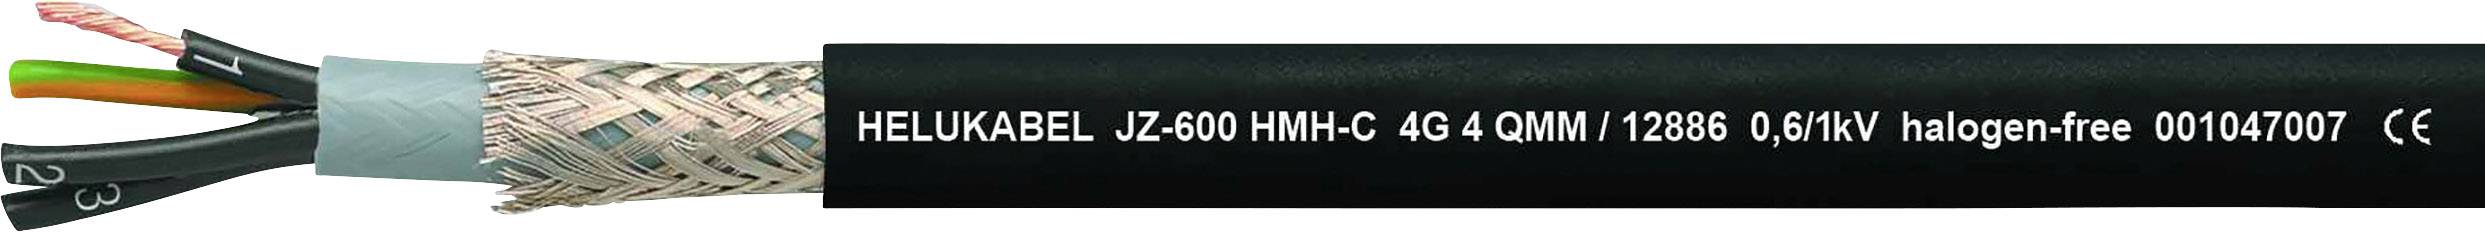 HELUKABEL JZ-600 HMH-C Steuerleitung 3 G 1.50 mm² Schwarz 12871-1000 1000 m